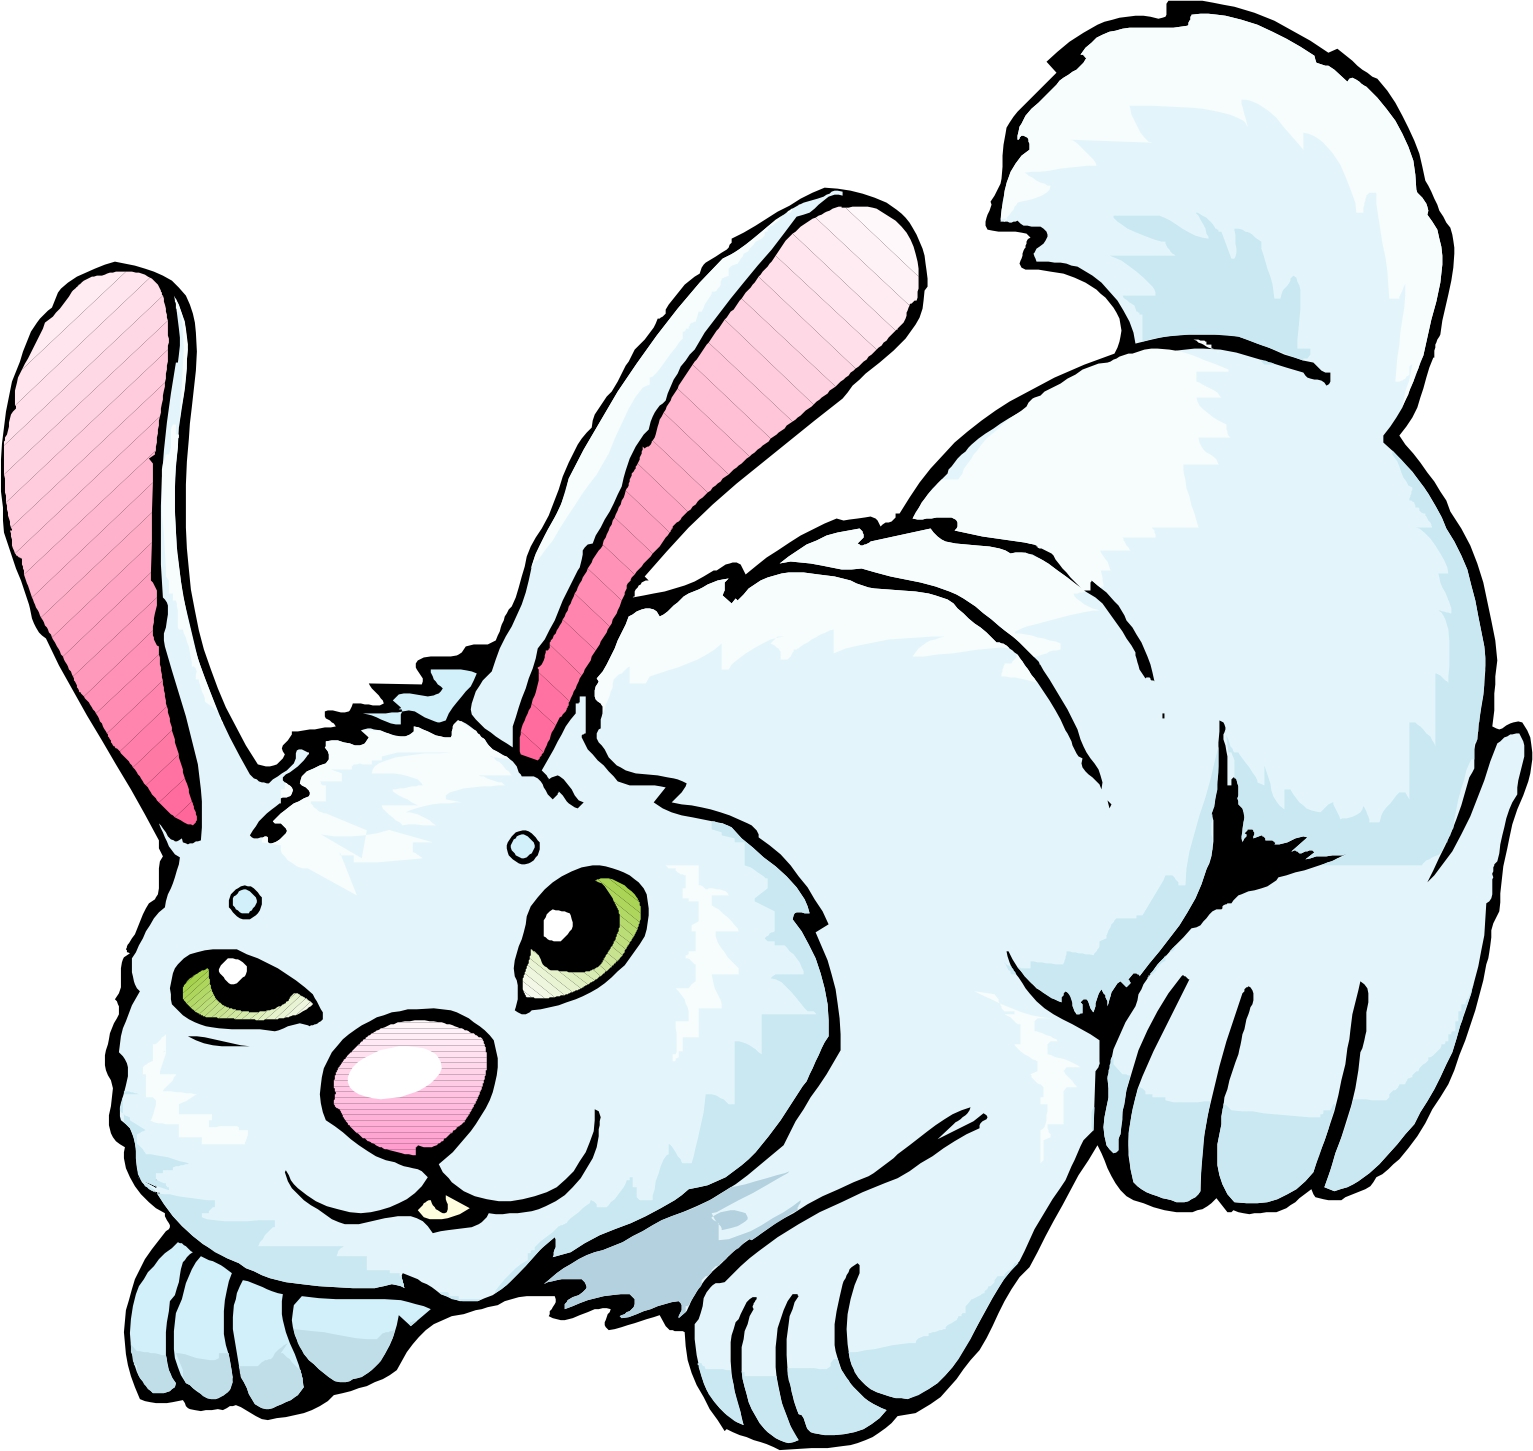 Catoon Cute Rabbit Image Free Download #3449 Wallpaper ...